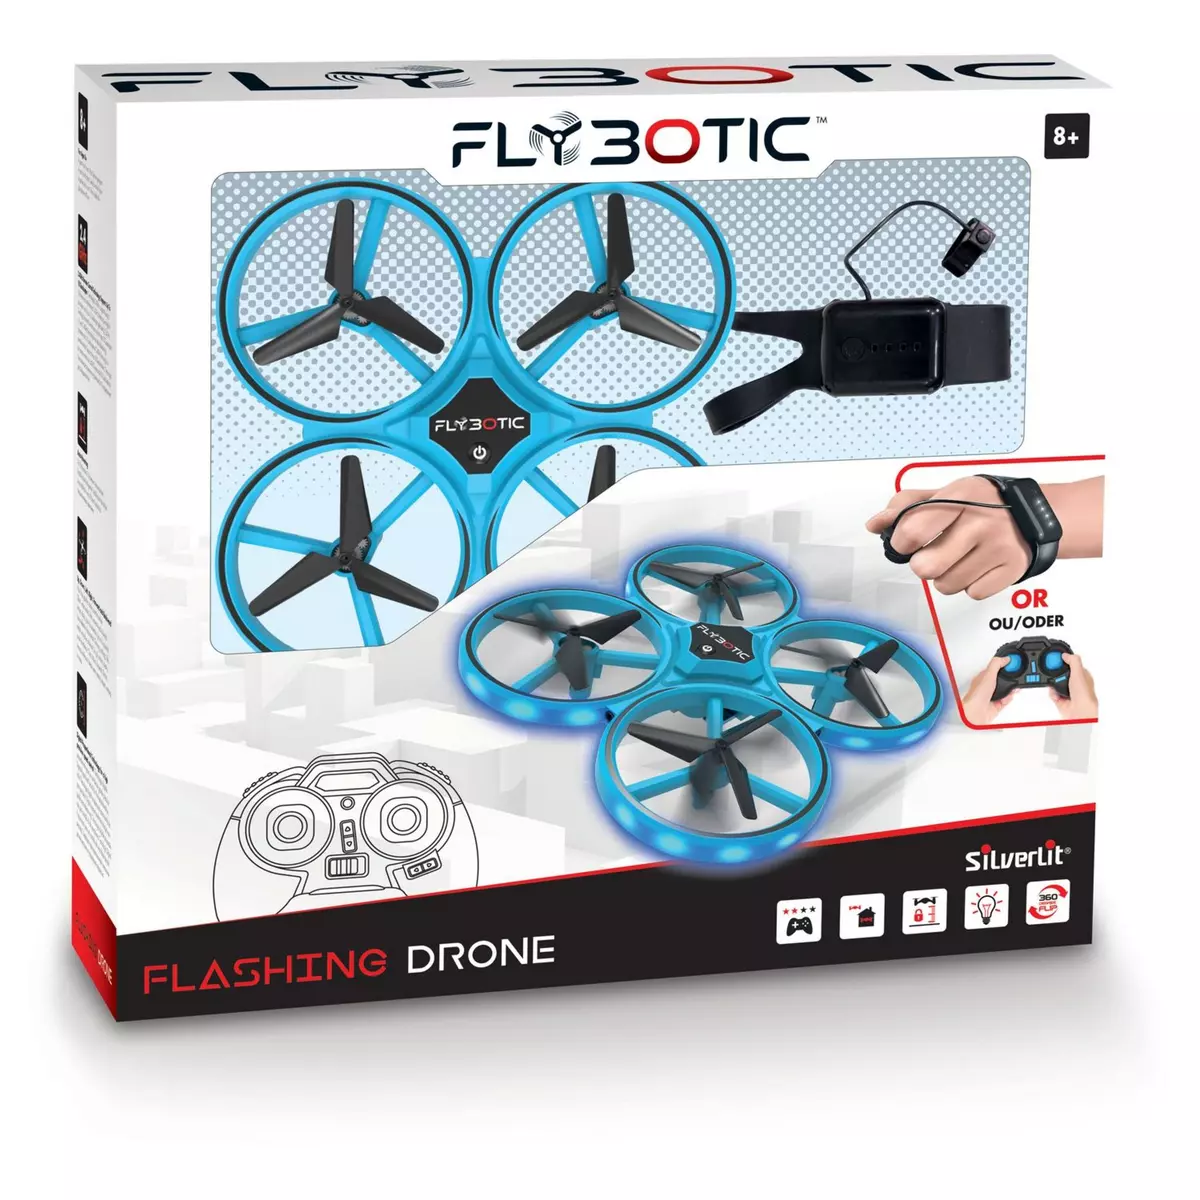 SILVERLIT Flashing Drone - Flybotic